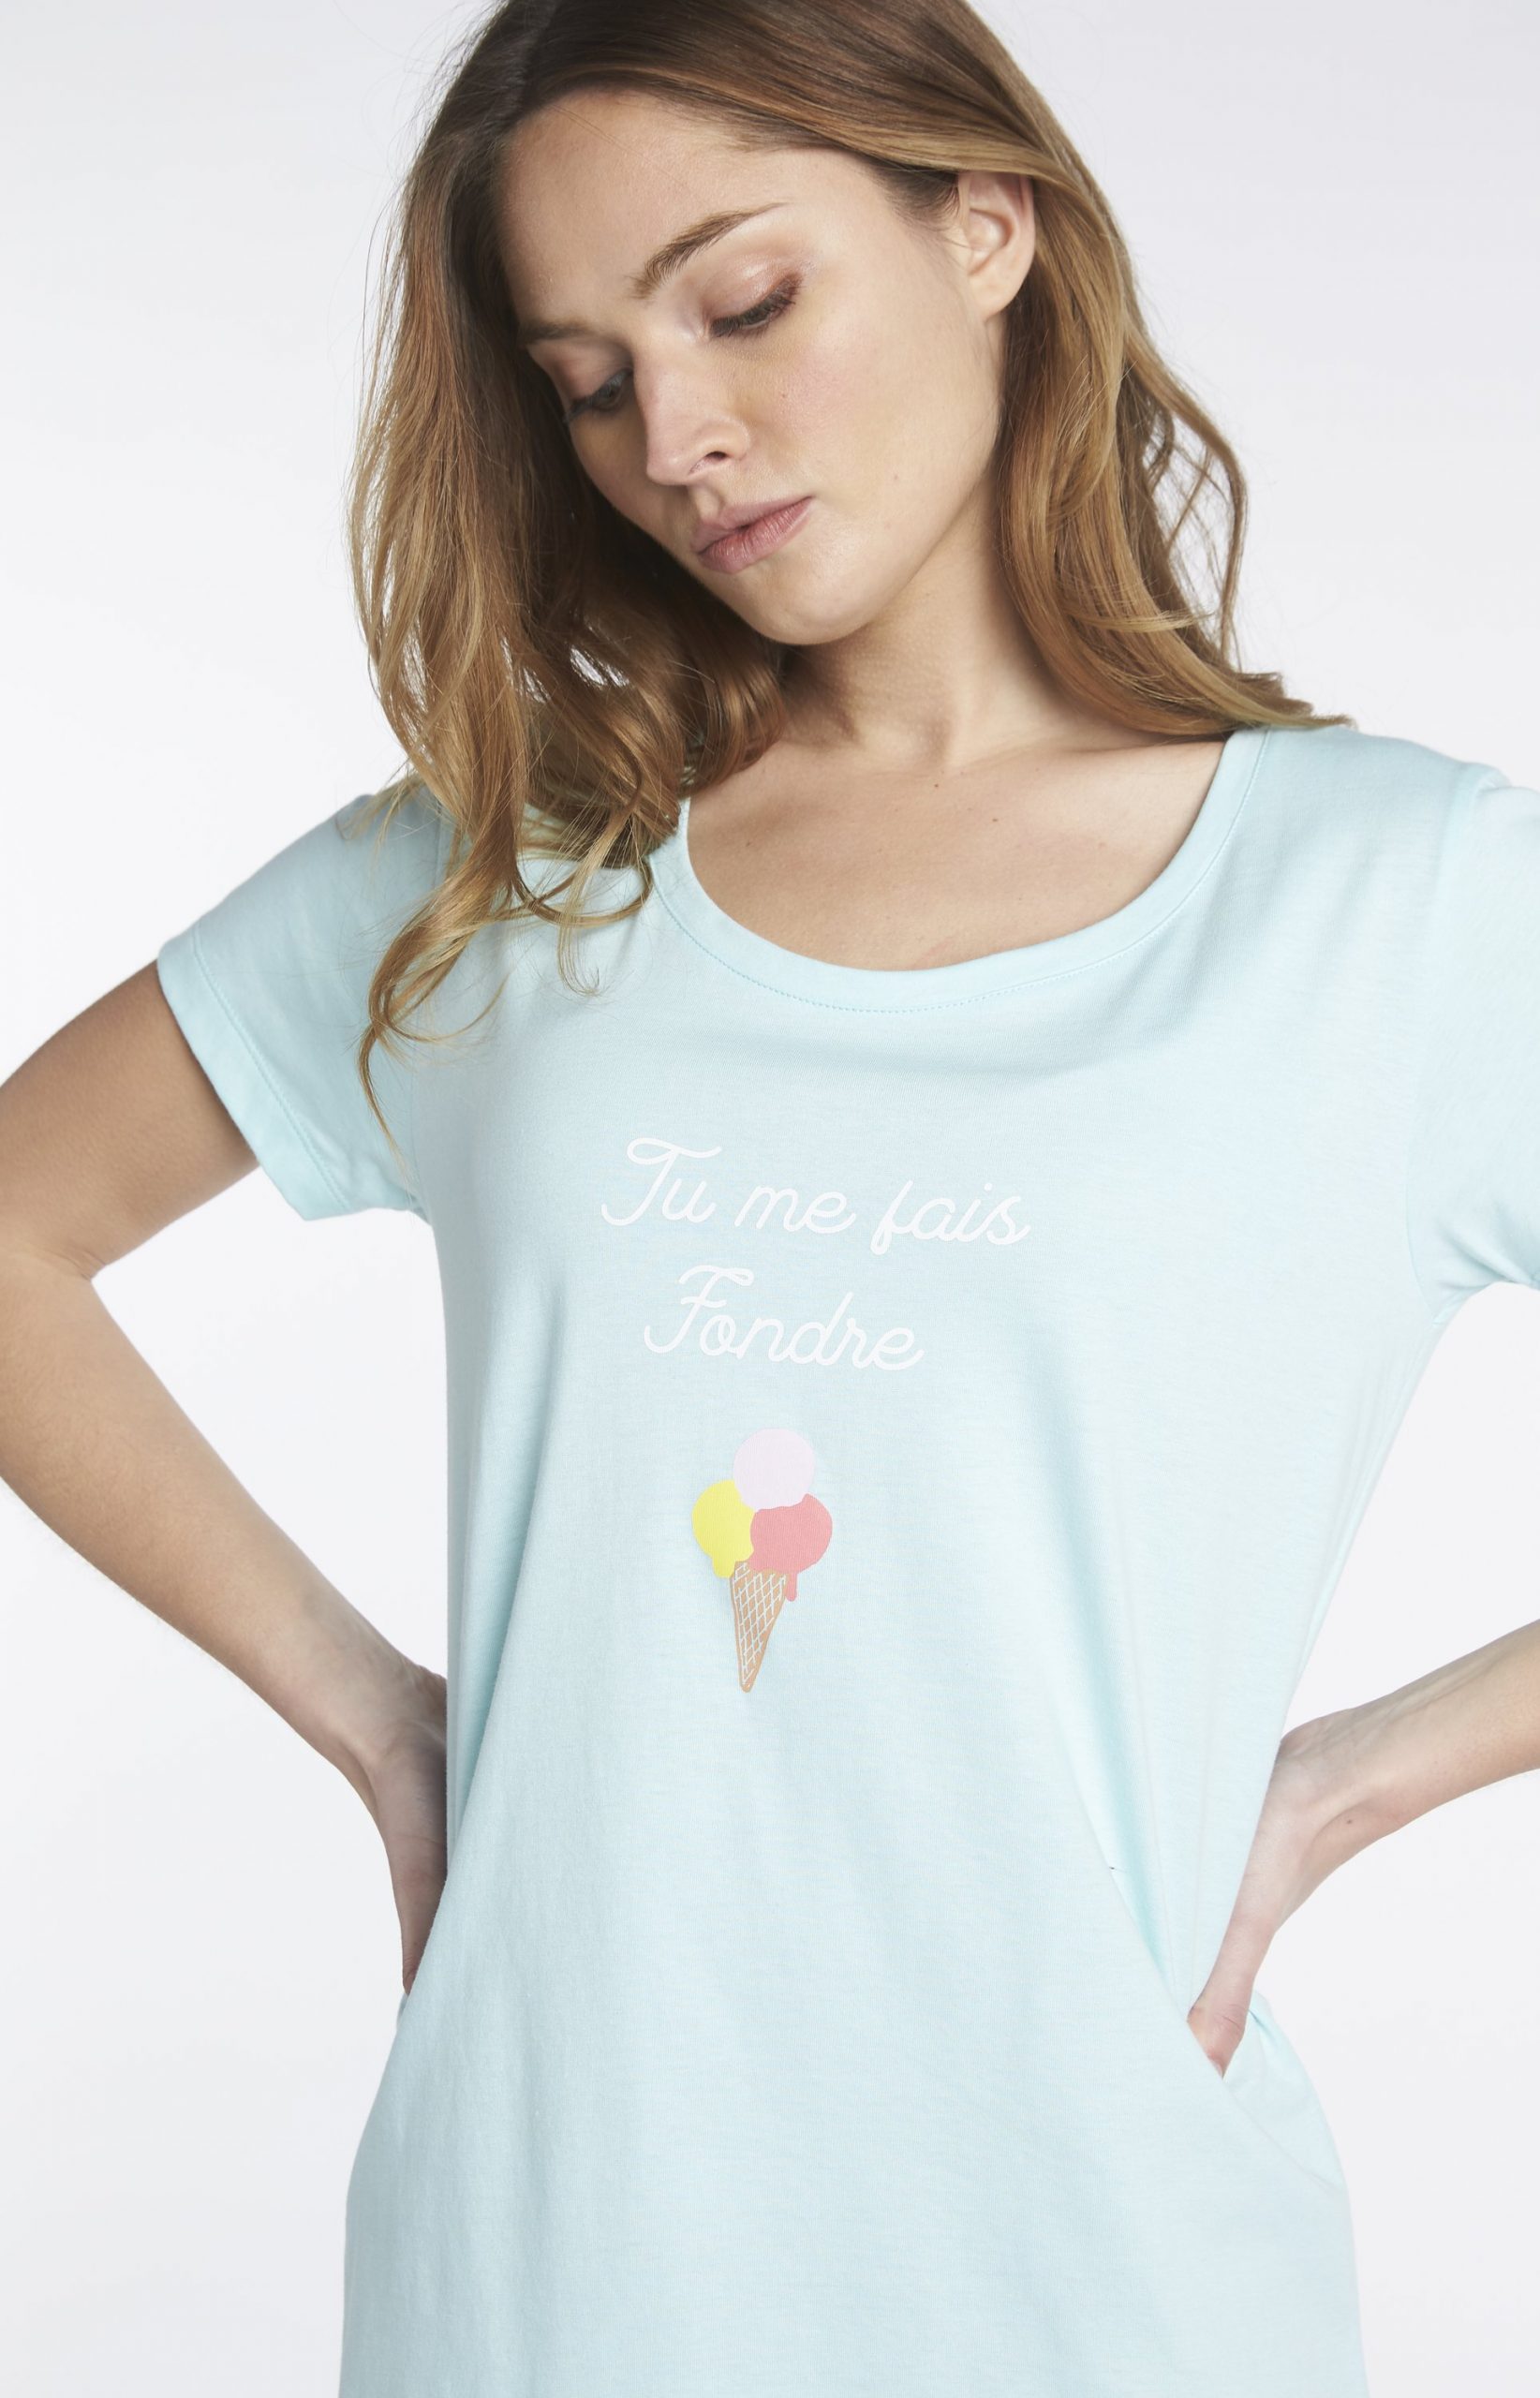 T.shirt de nuit Ice cream